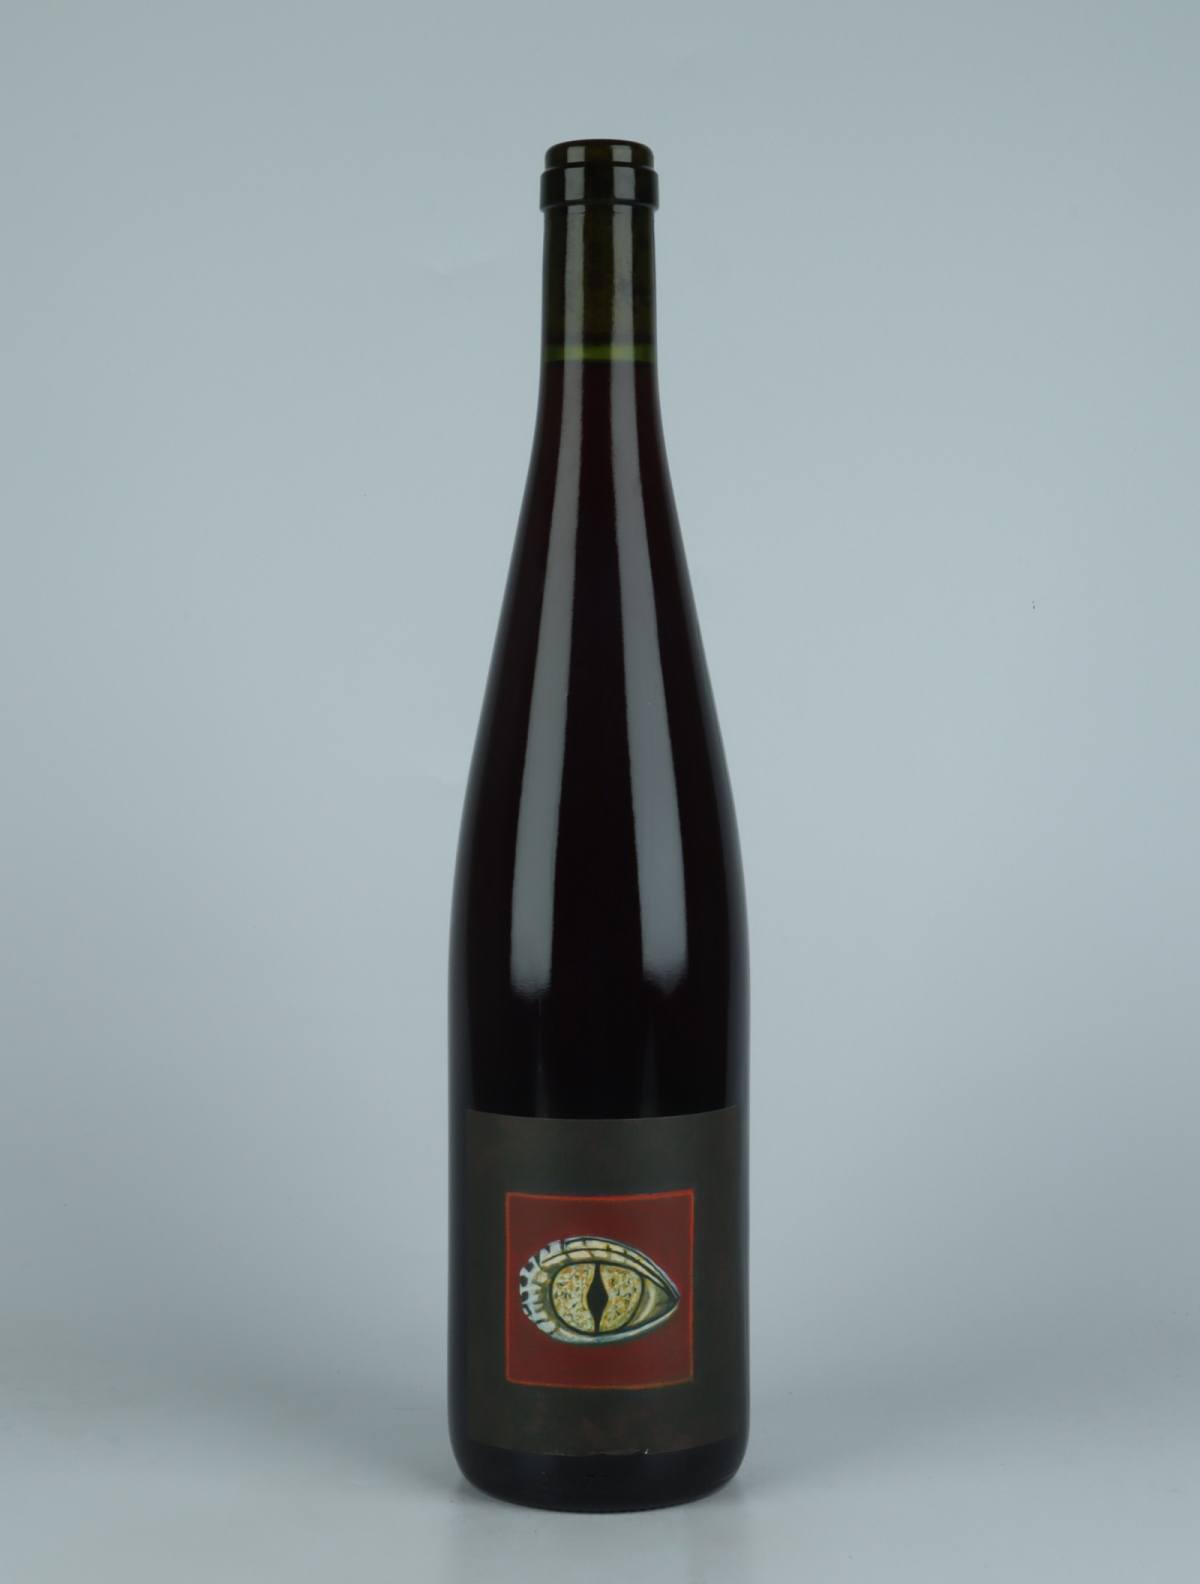 En flaske 2022 Pinot Noir - Vieille Vigne Rødvin fra Domaine Rietsch, Alsace i Frankrig